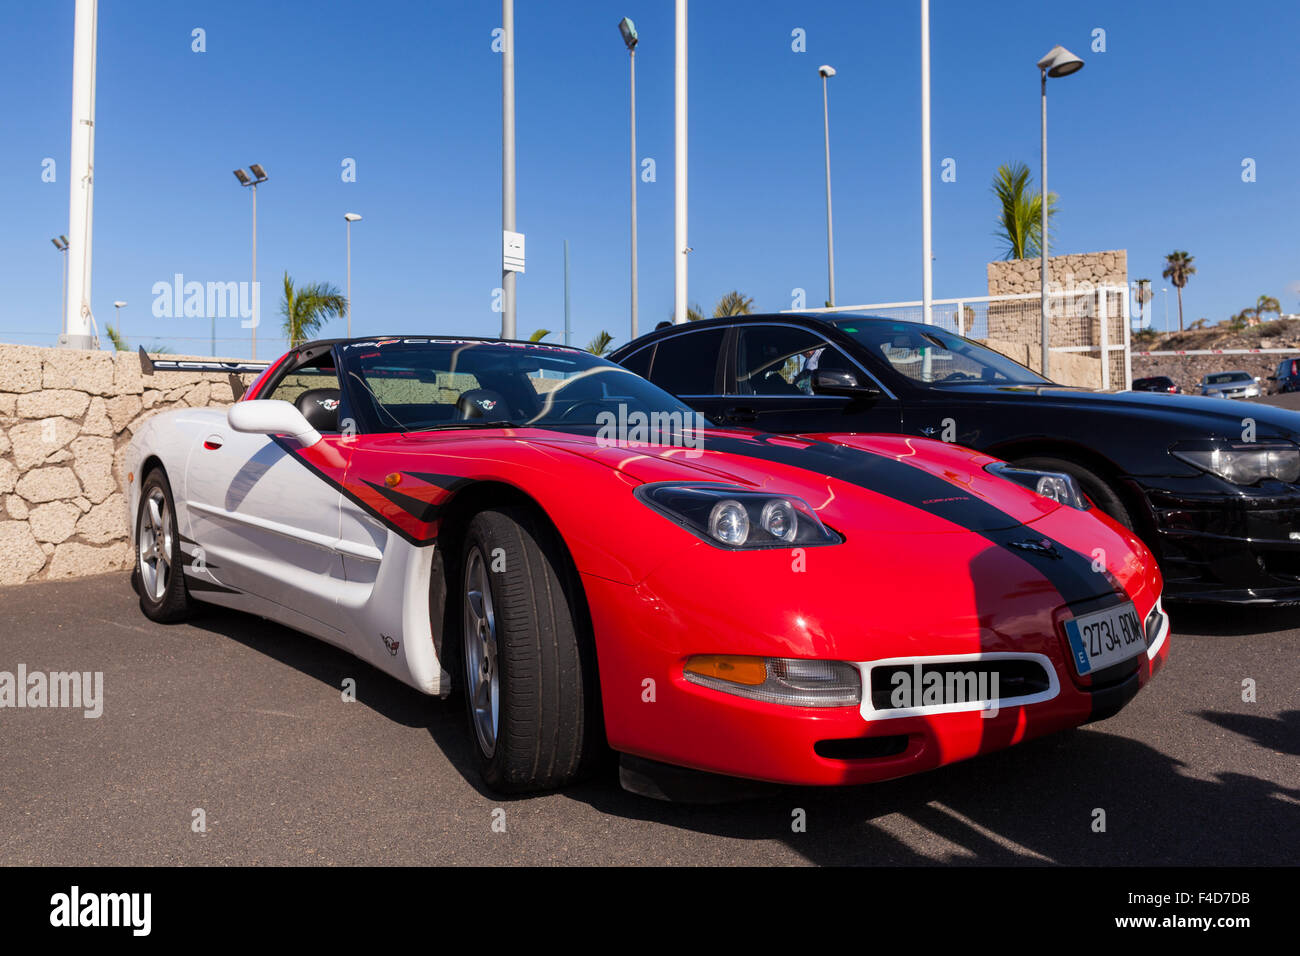 Red black white Corvette coupe in car park. Stock Photo